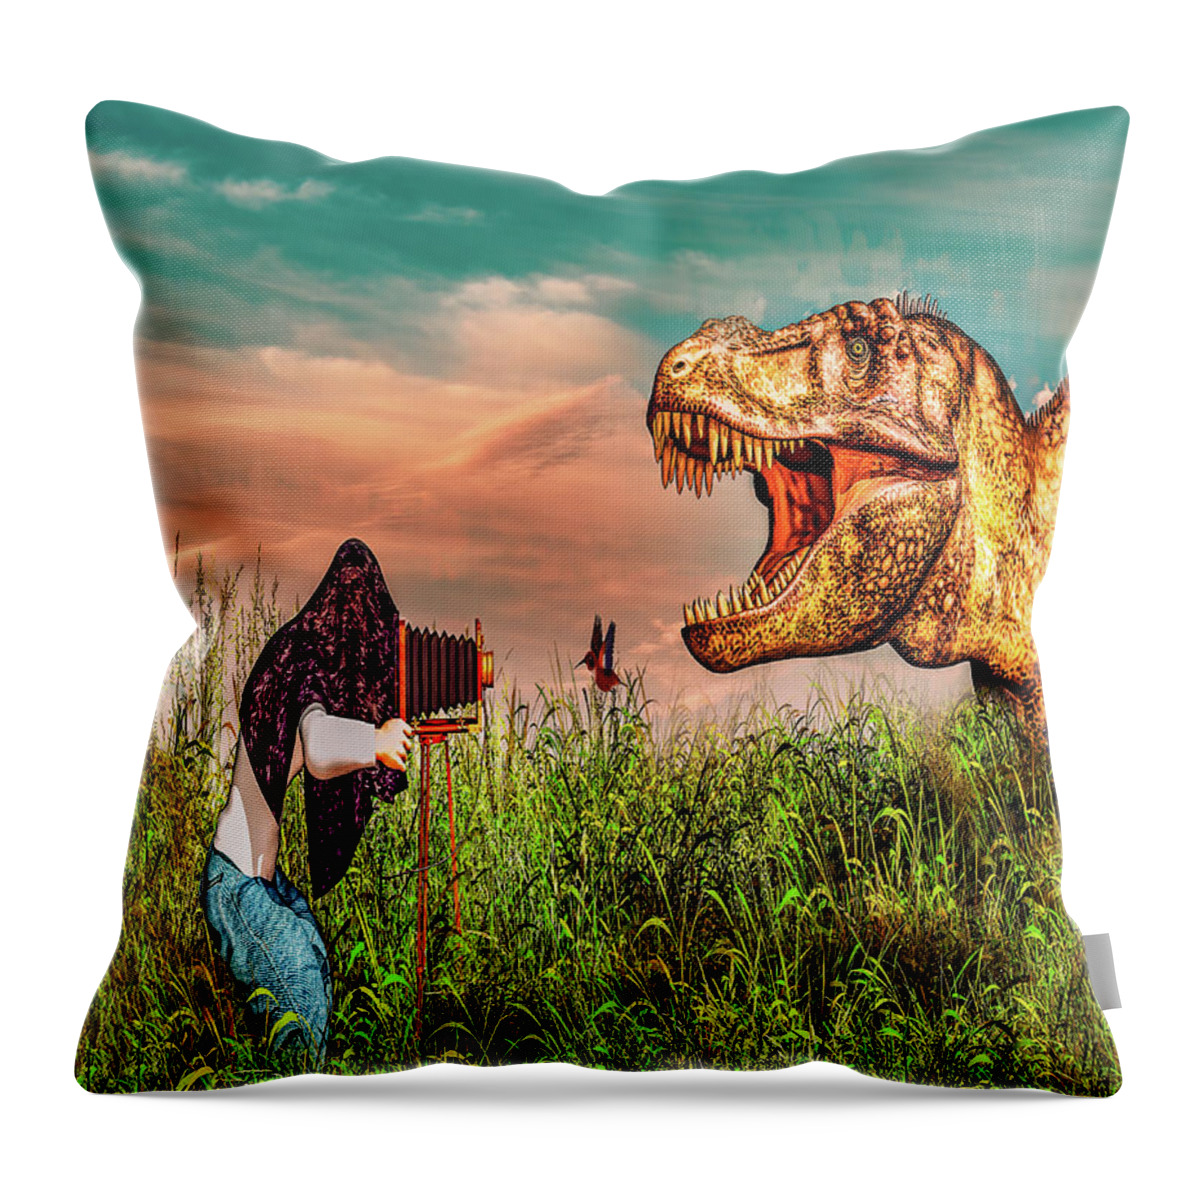 Dinosaur Throw Pillow featuring the photograph Wildlife Photographer by Bob Orsillo